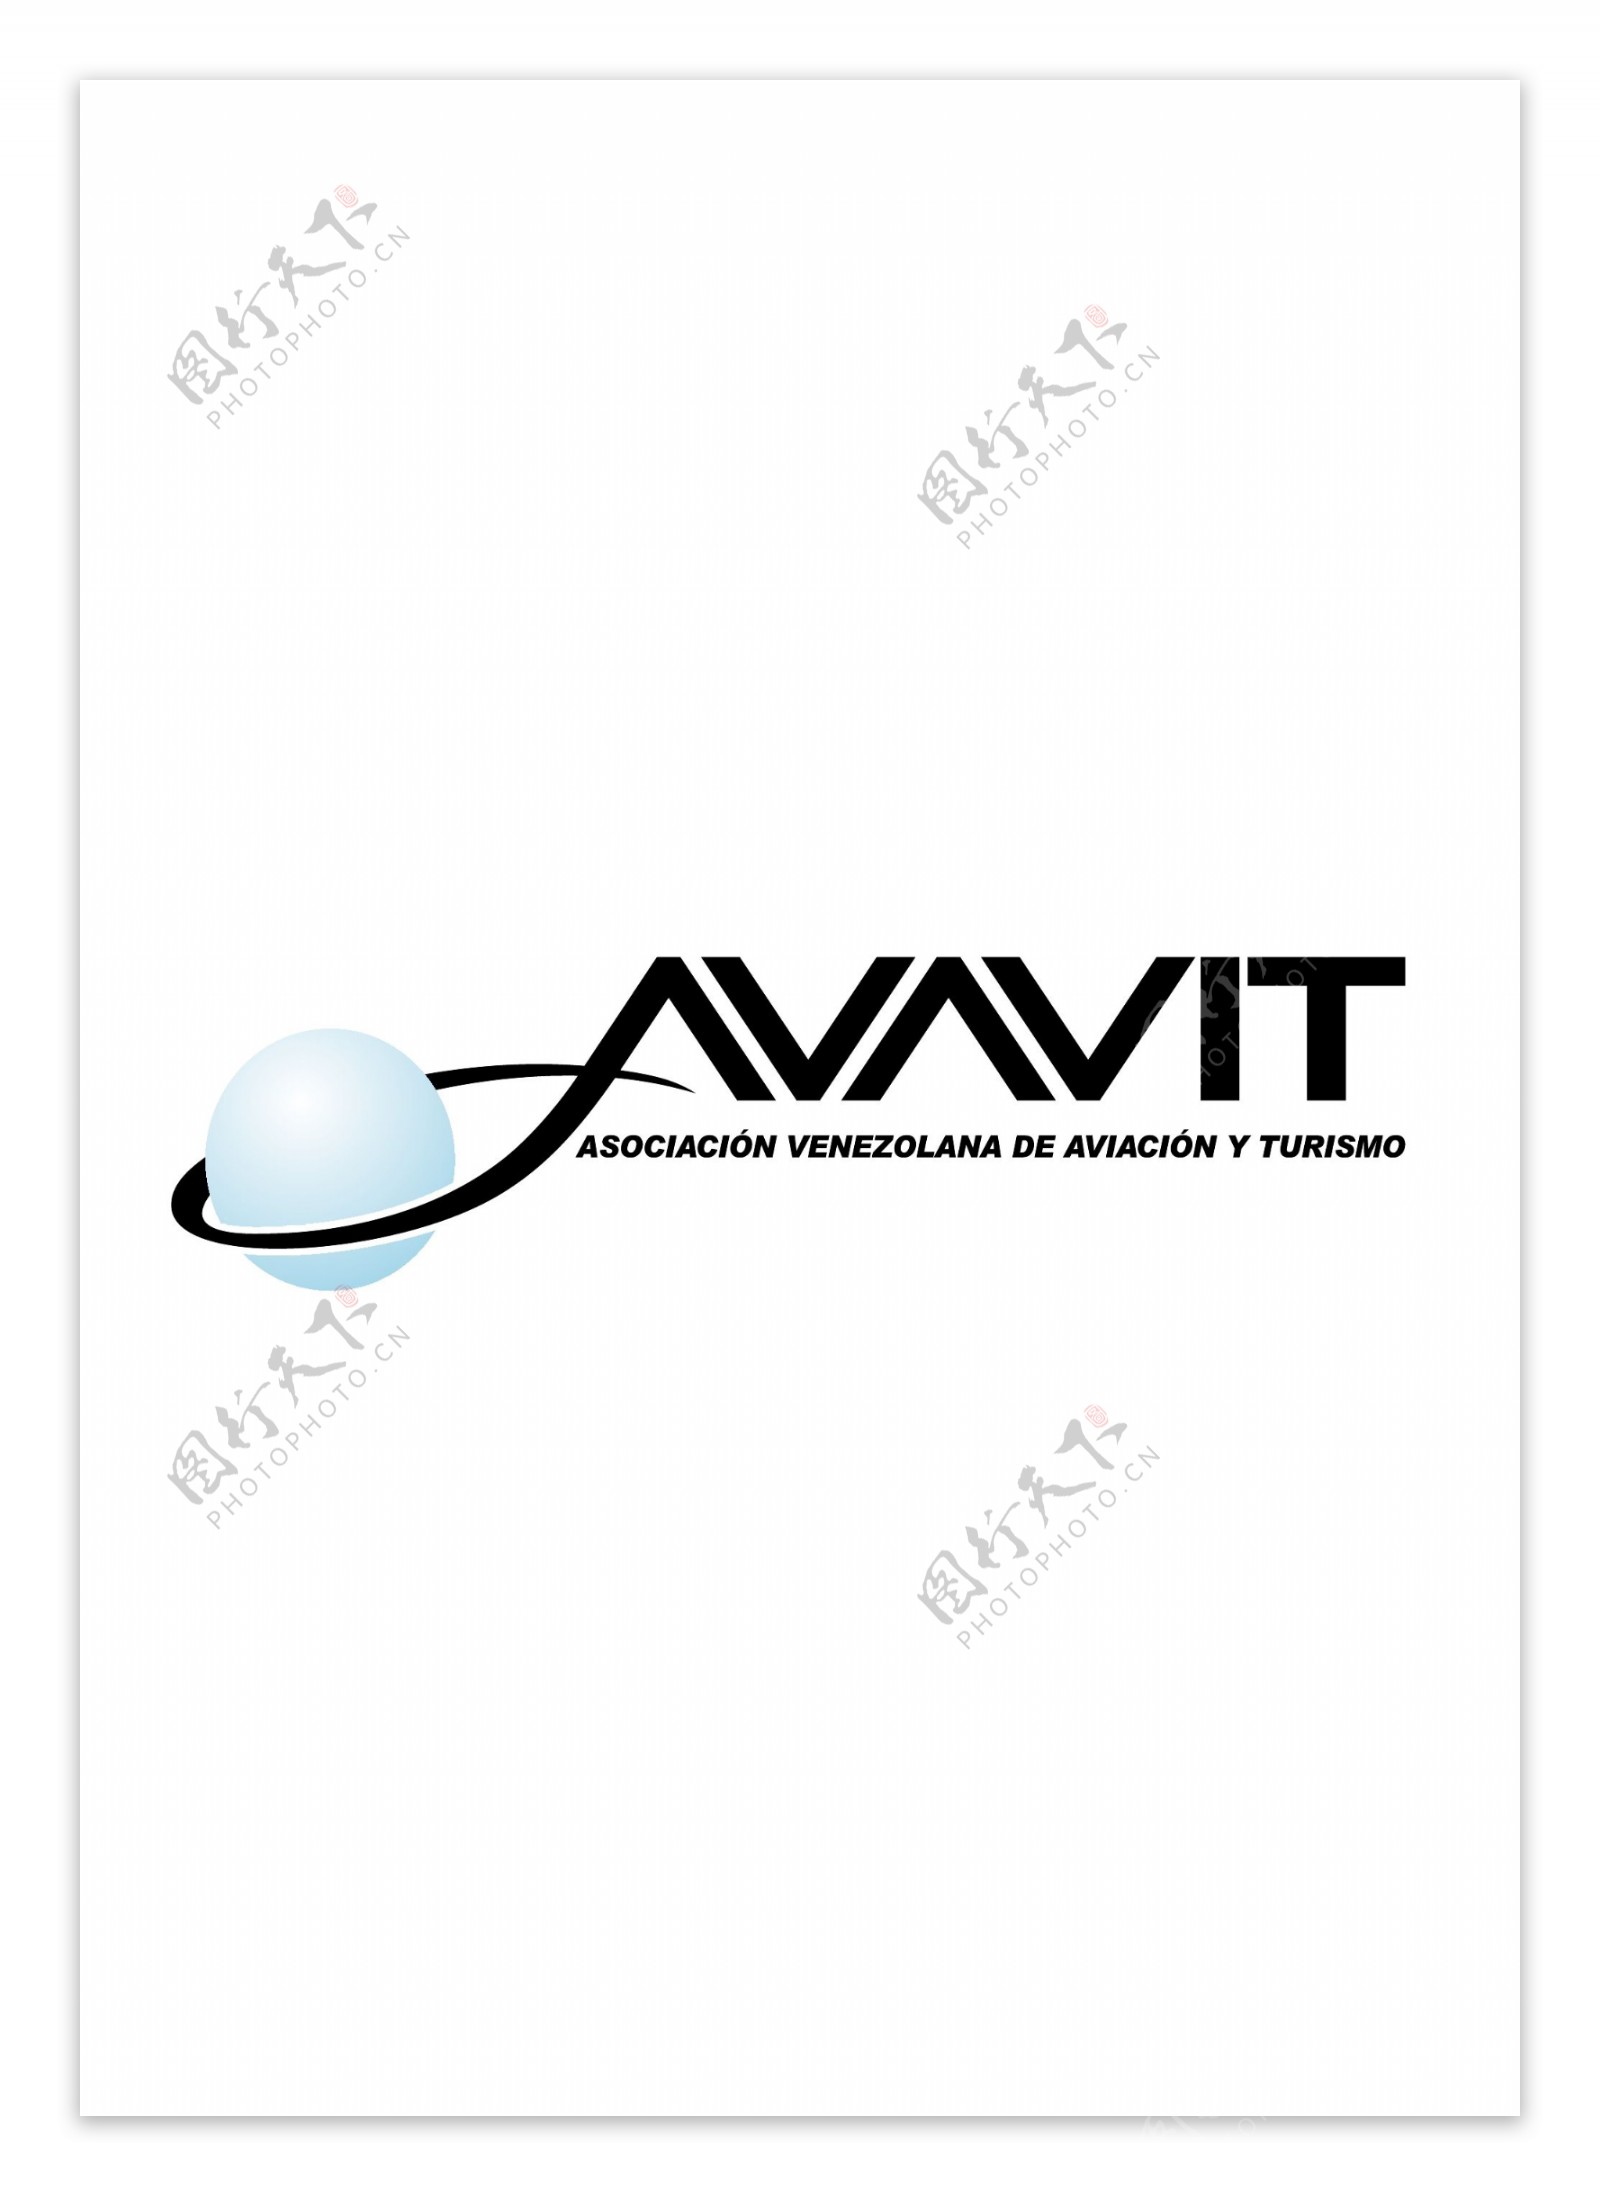 Avavitlogo设计欣赏Avavit旅行社标志下载标志设计欣赏